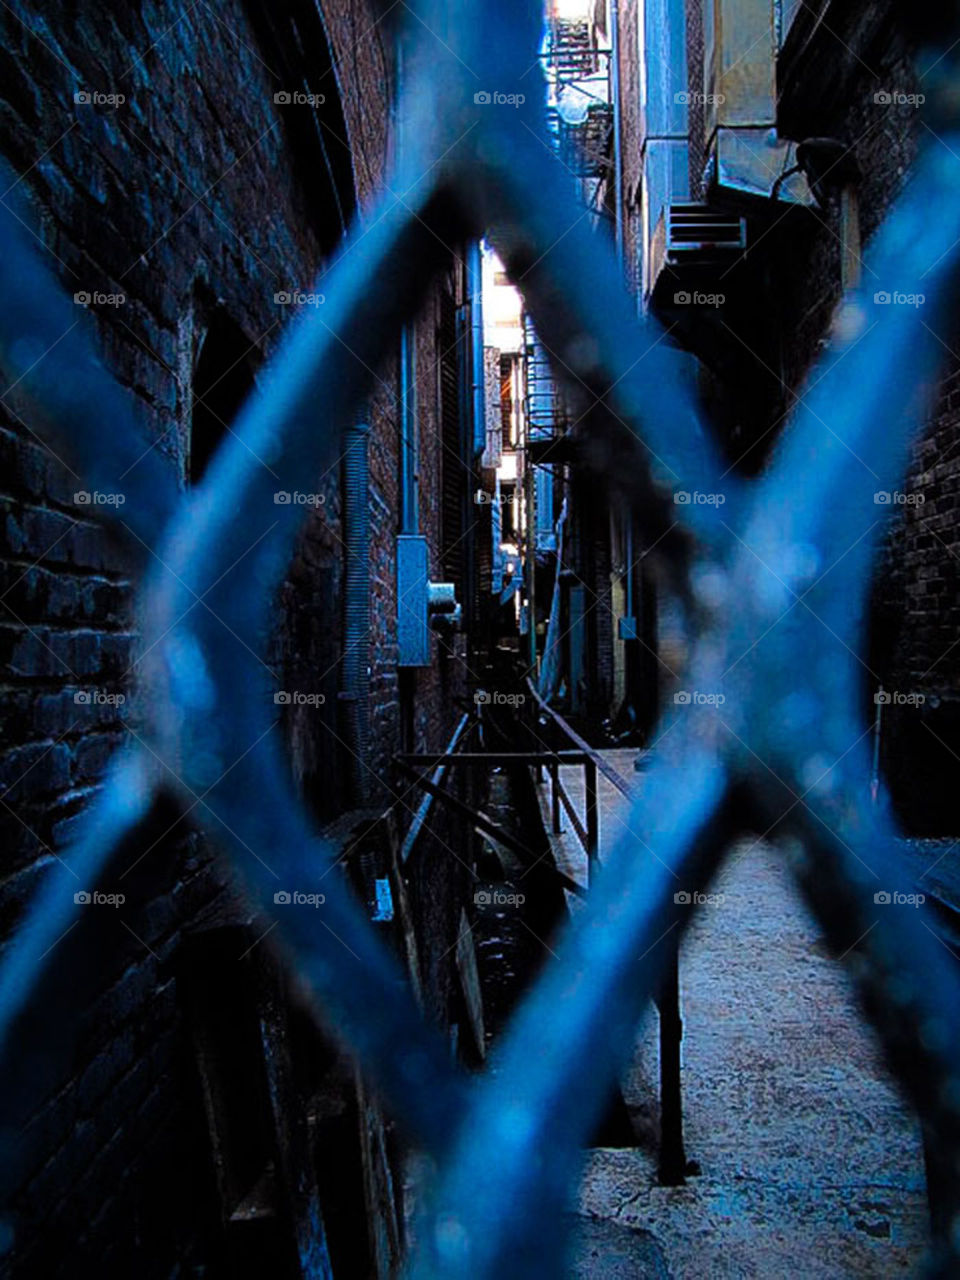 Alley In-Between. An alley in between two buildings